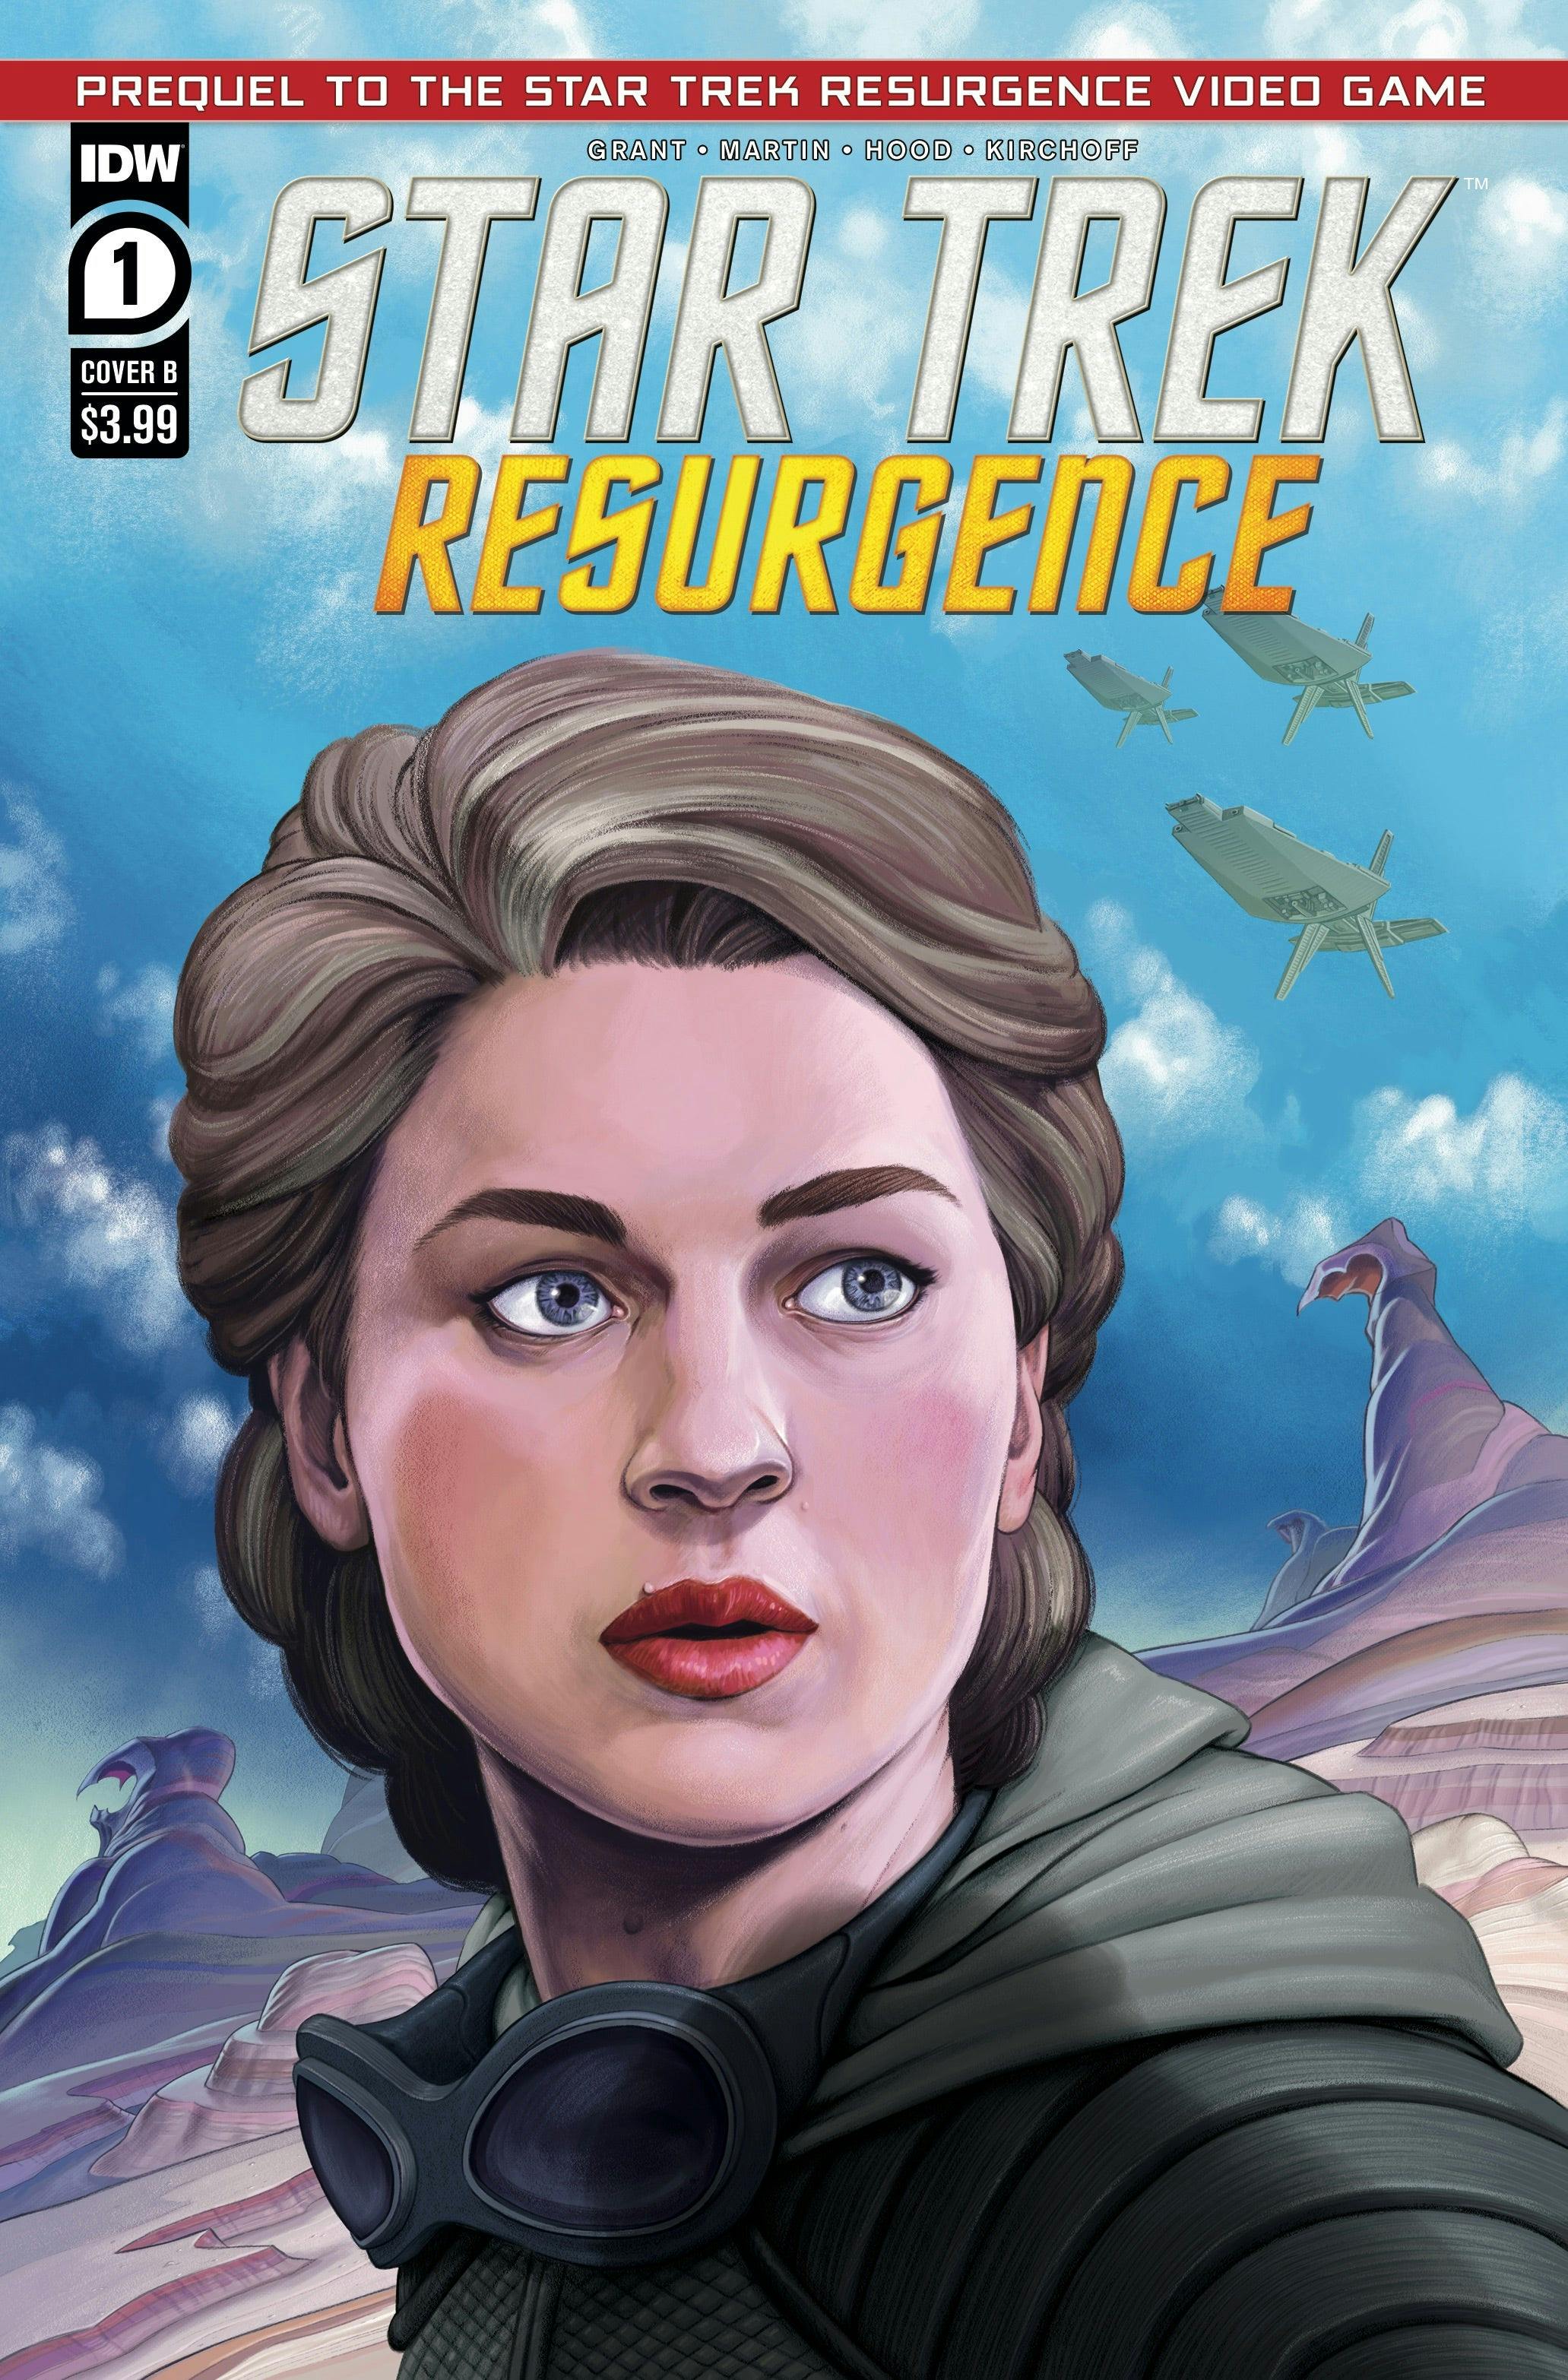 STAR TREK: RESURGENCE #1 Cover B art by Dramatic Labs